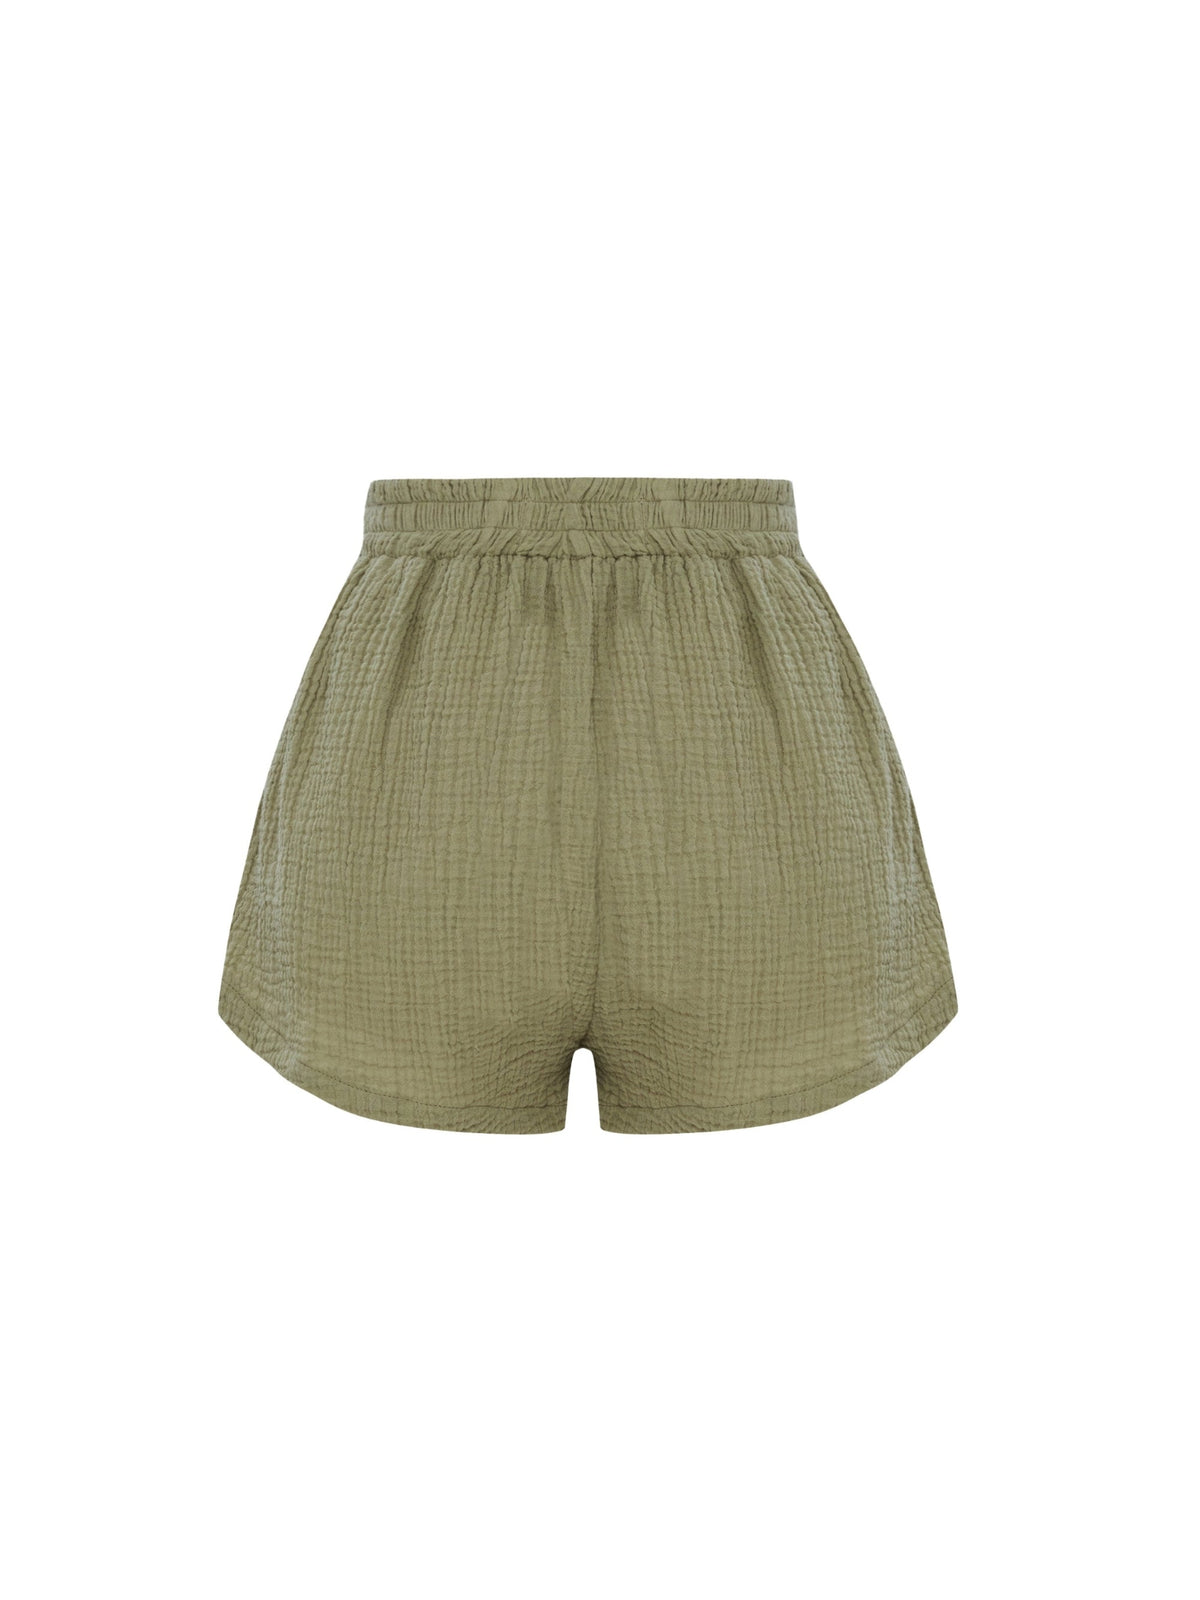 THE HAND LOOM Echo Womens Boy Shorts - Khaki Green